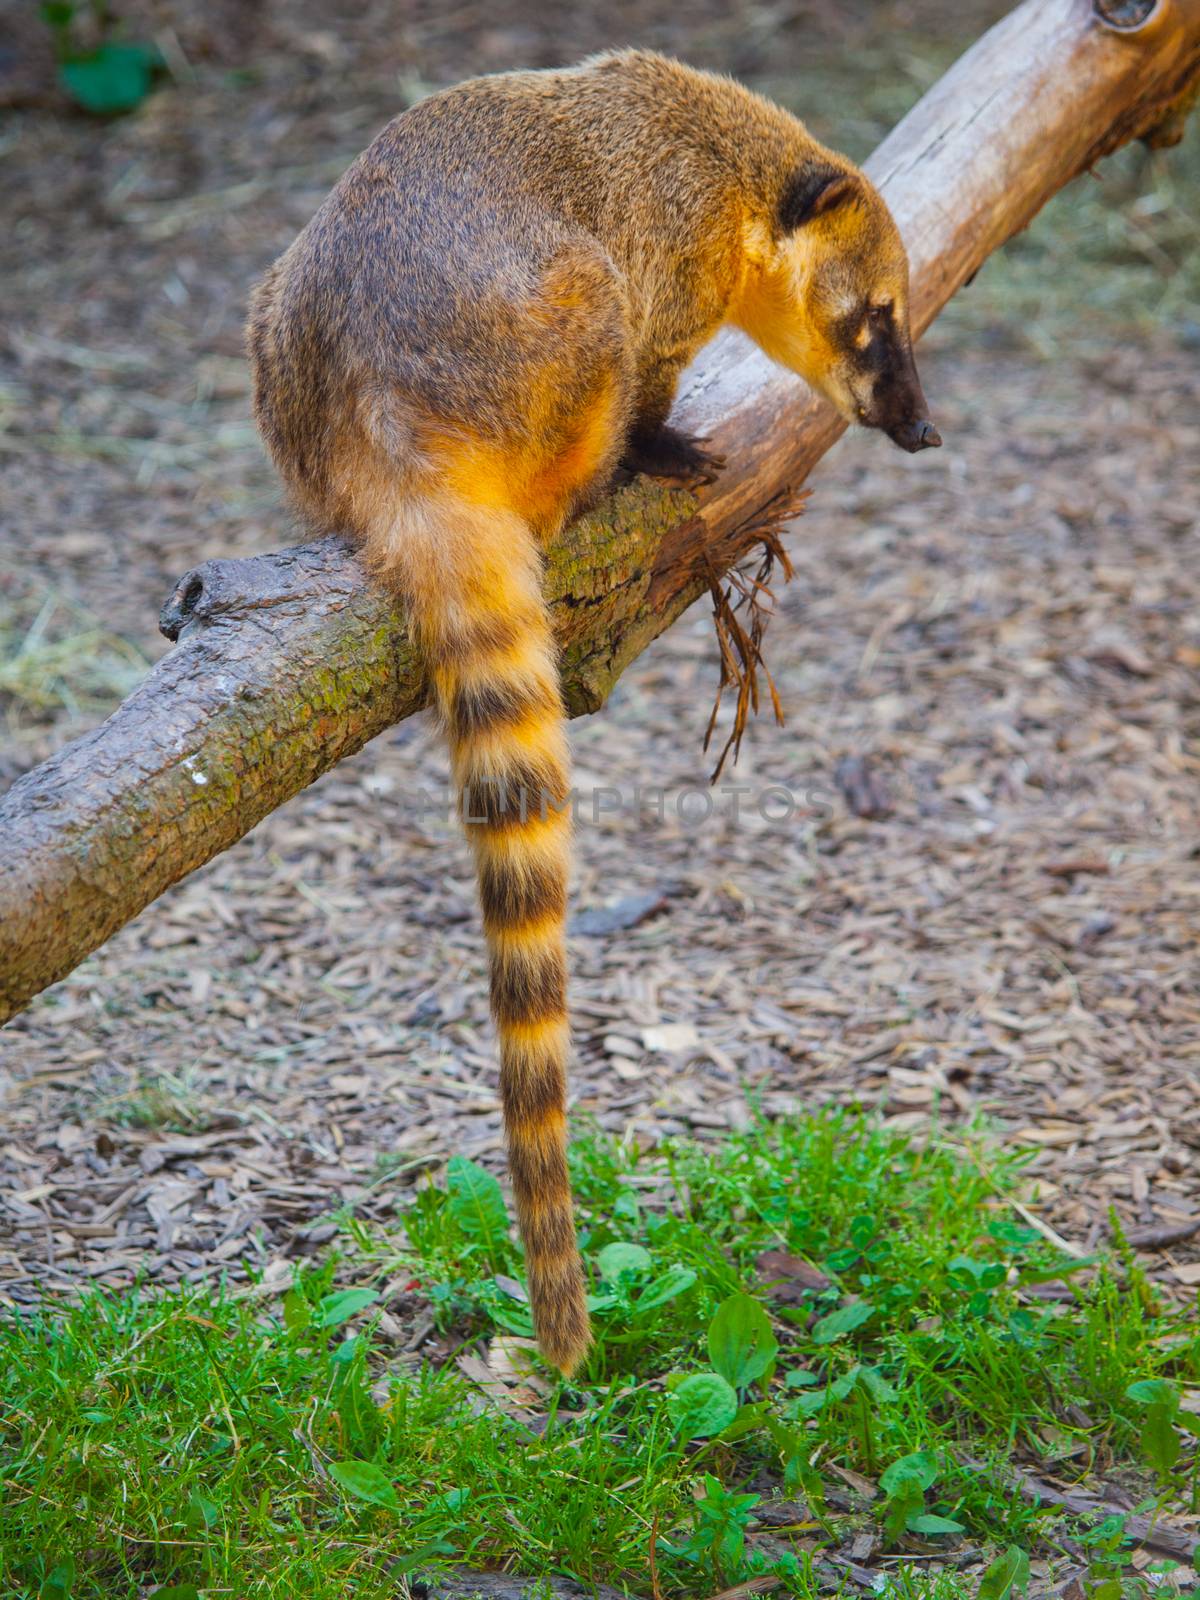 Coati (Nasua nasua) with long tail sitting on the branch